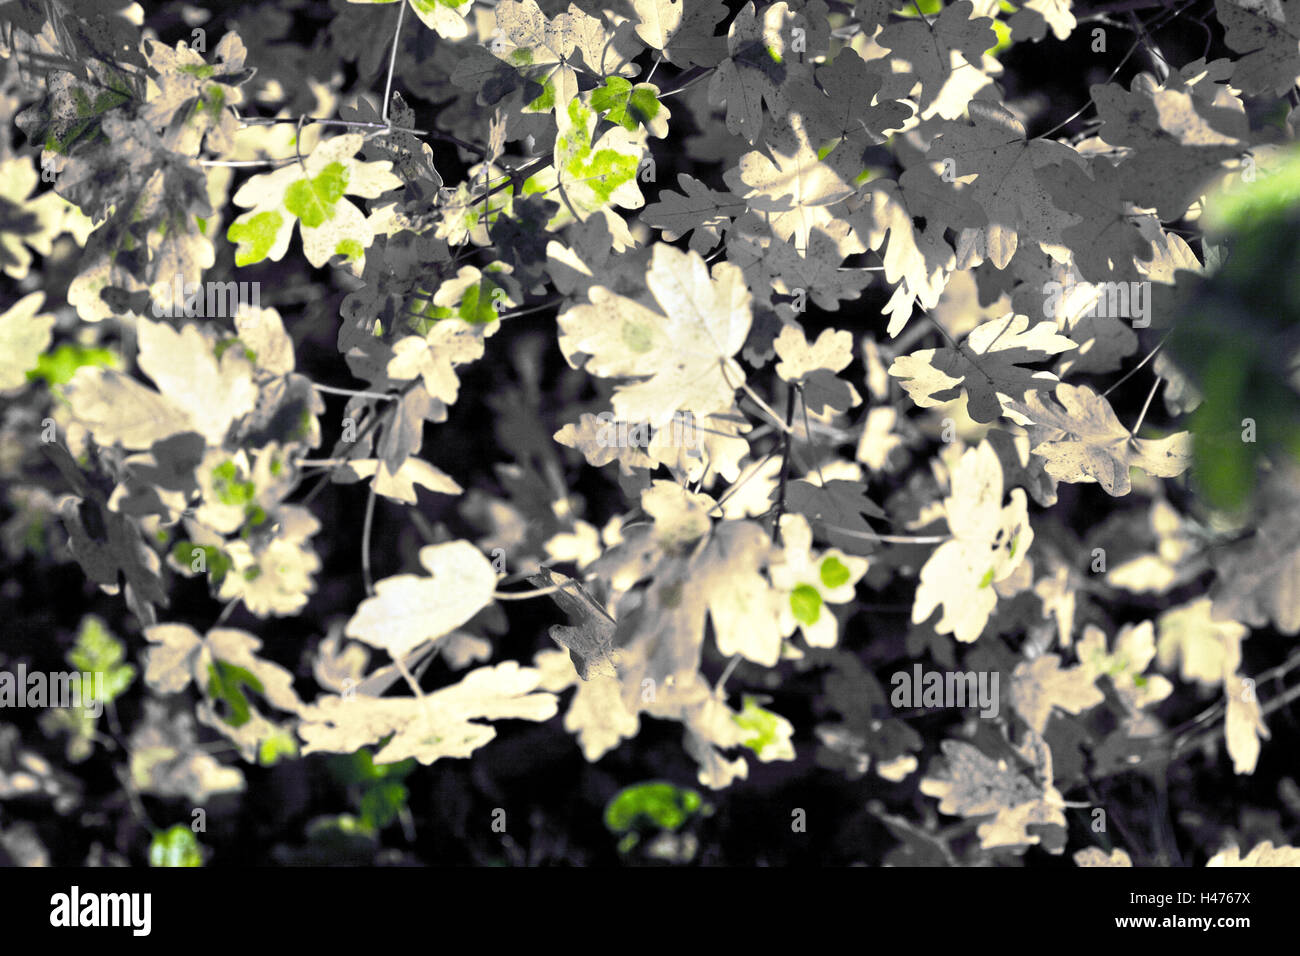 Autumn foliage, vague, foliage, autumn, season, leaves, autumn leaves, maple leaves, transient, wilts, back light, Stock Photo